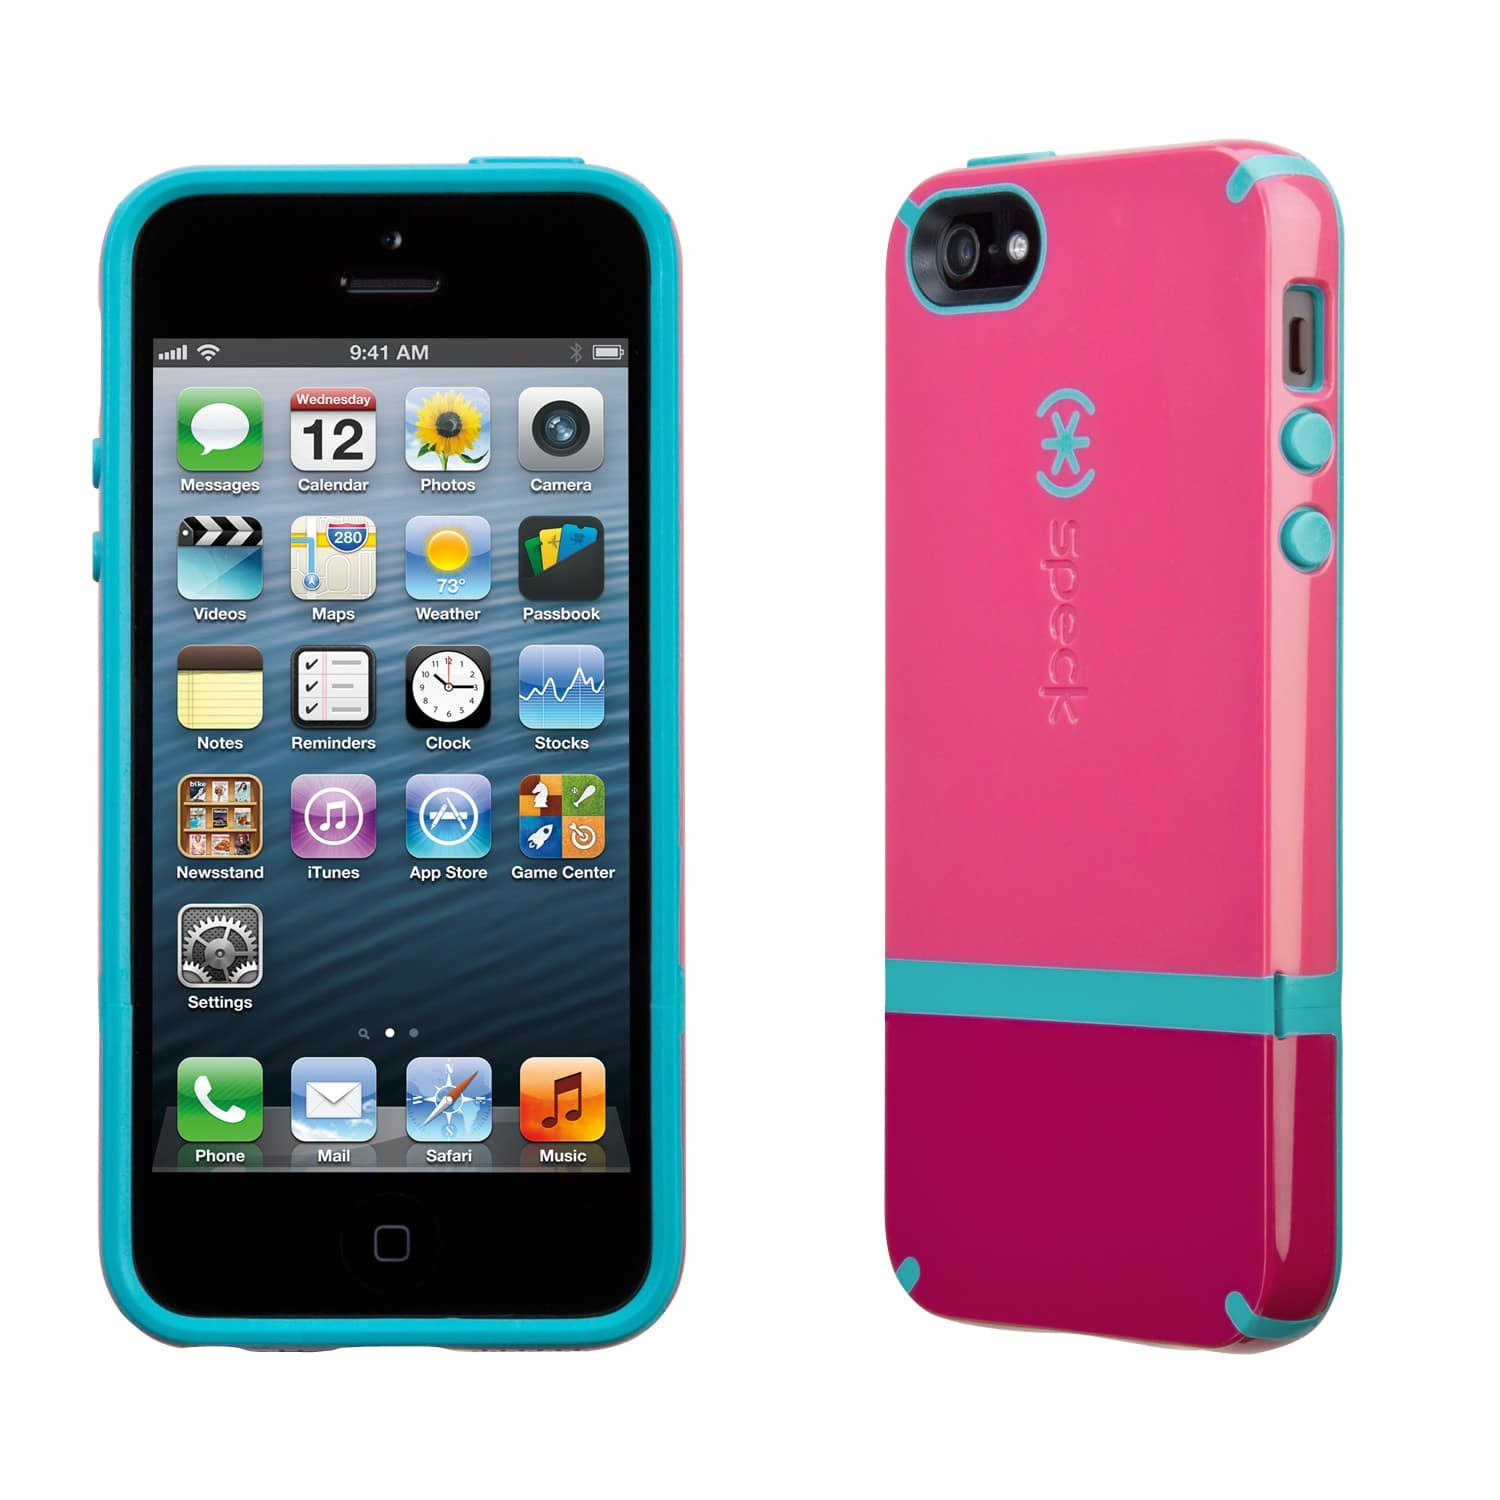 Speck Candyshell Flip iPhone 5 - Raspberry/Dark Raspberry/Peacock